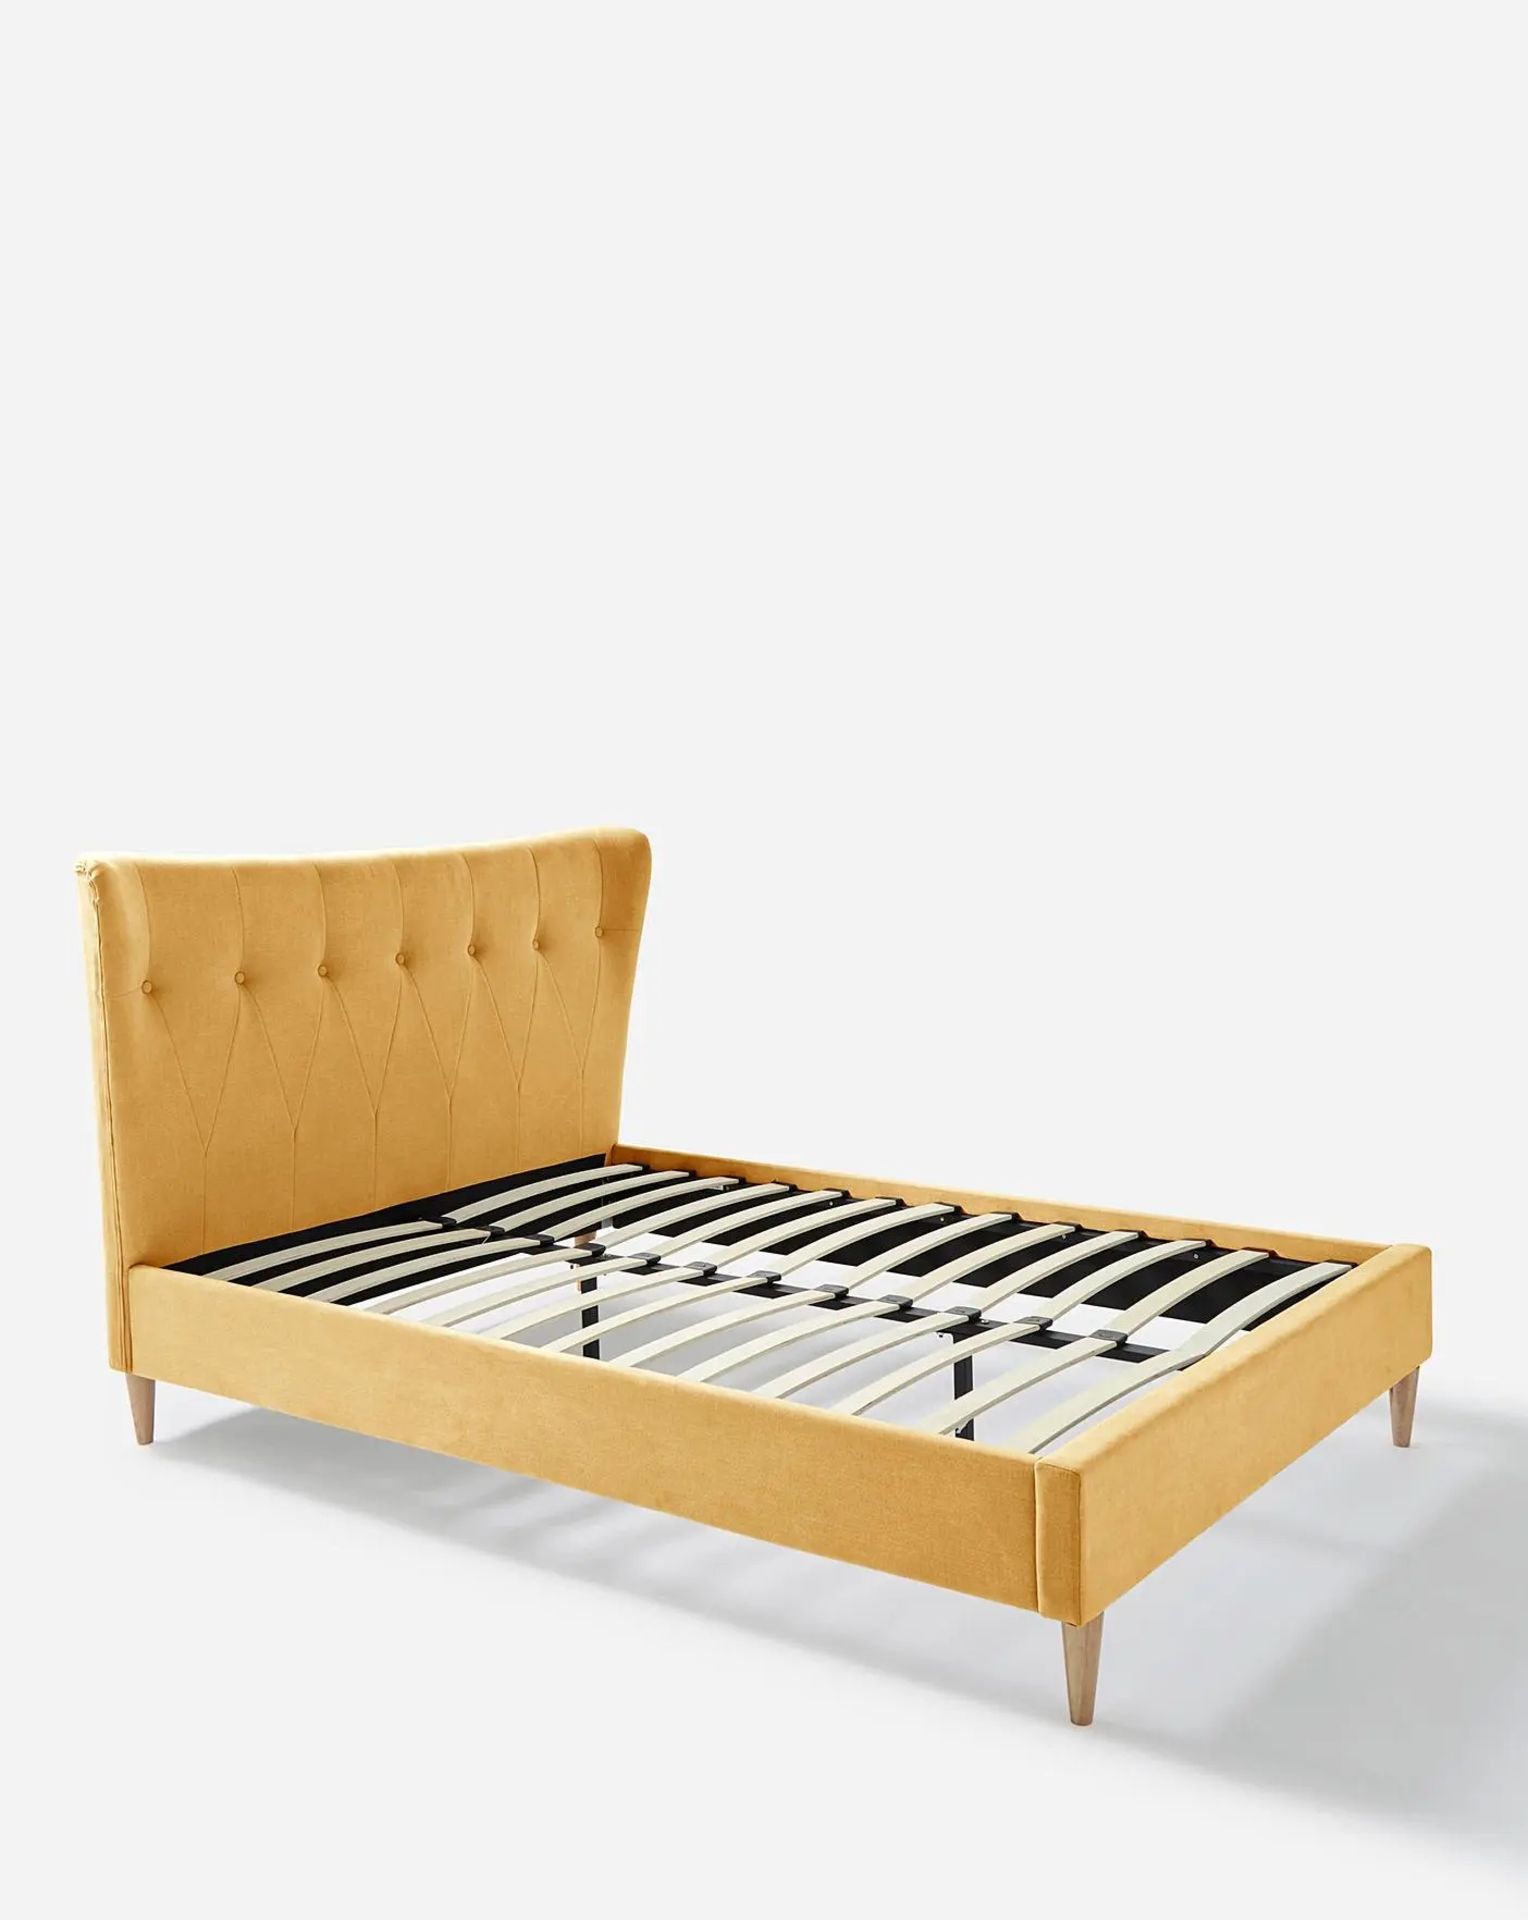 BRAND NEW AVIANA Fabric KINGSIZE Bed Frame. OCHRE. RRP £399 EACH. The Aviana Fabric Bed Frame - Image 3 of 3